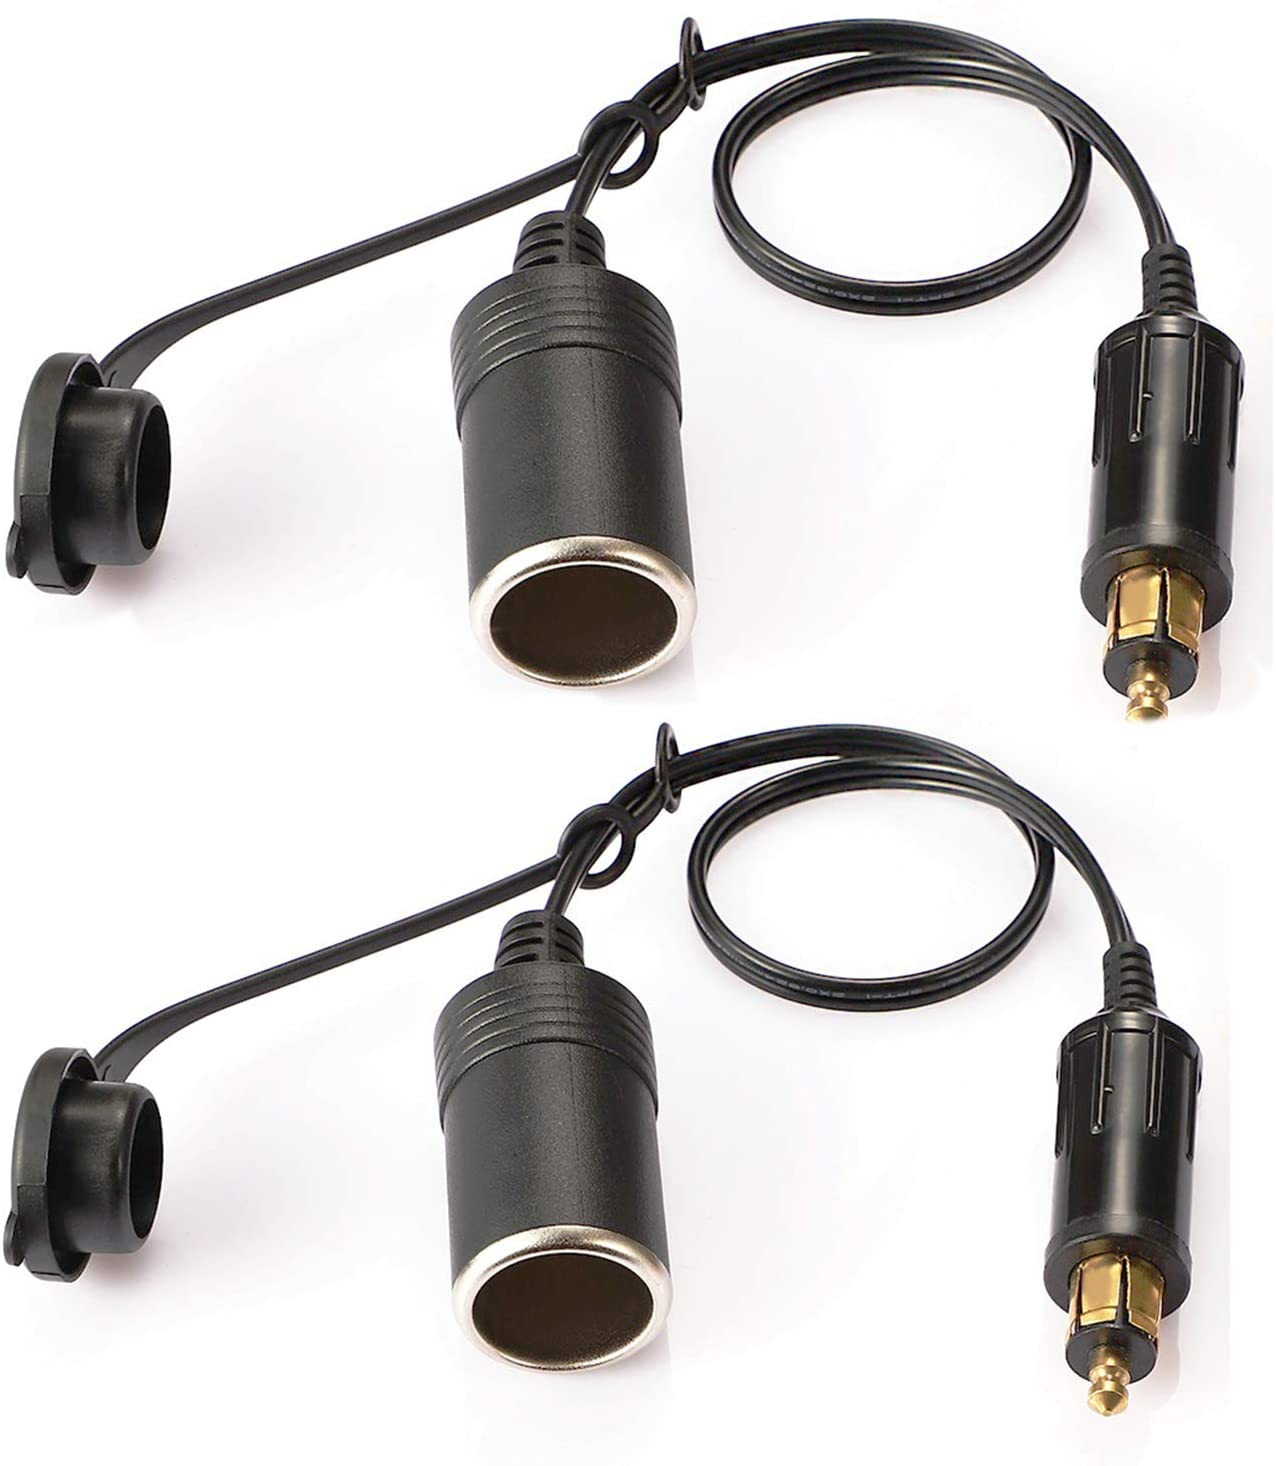 iMESTOU European Male Din Plug-US Female Cigarette Lighter Socket Adapter 12V-24V with Waterproof Cover